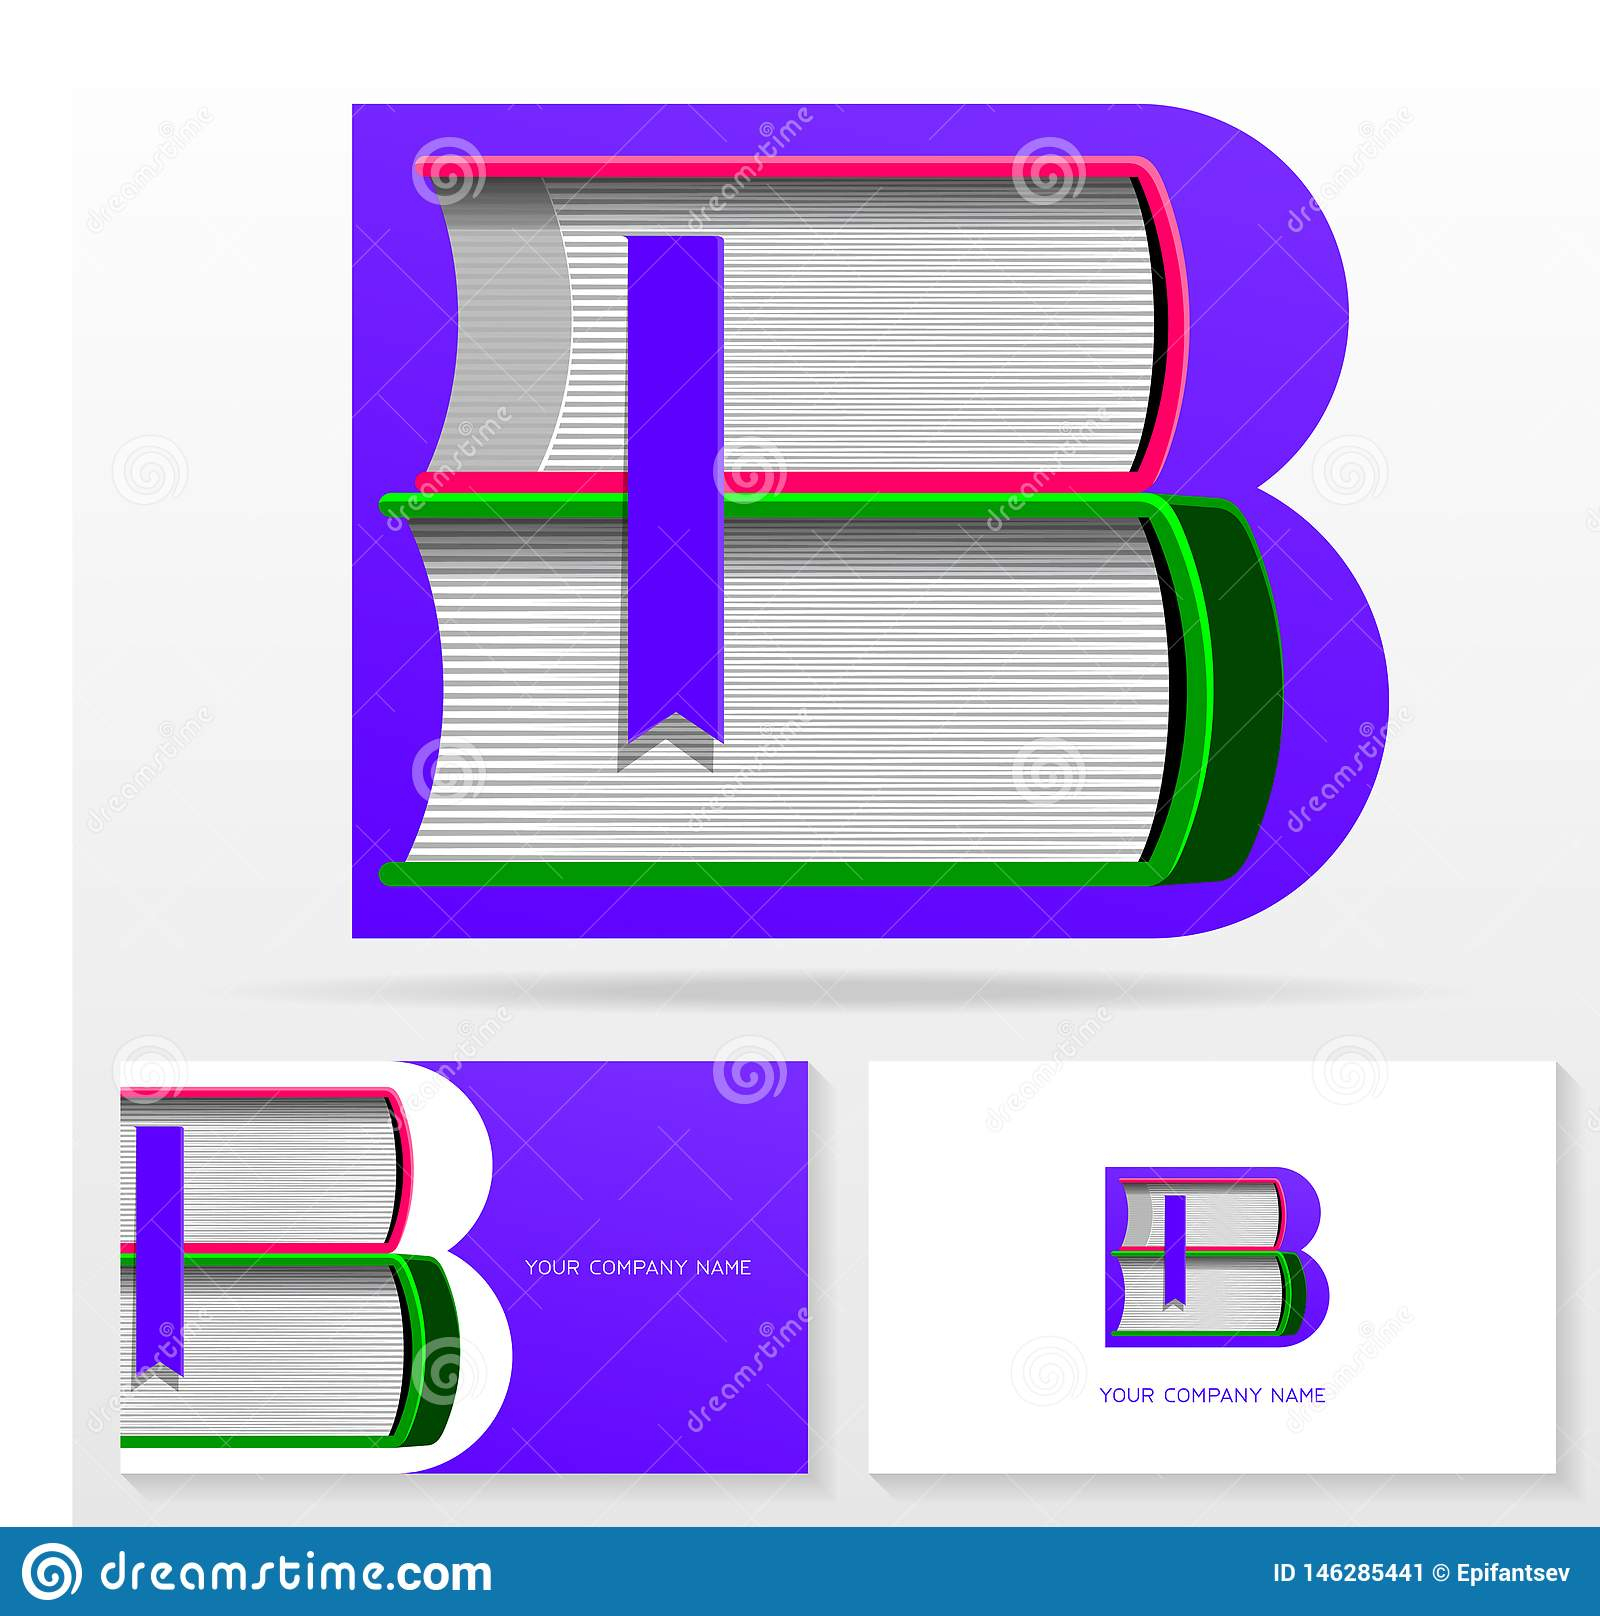 Letter B Logo Design Template. Letter B Made Of Books Regarding Library Catalog Card Template